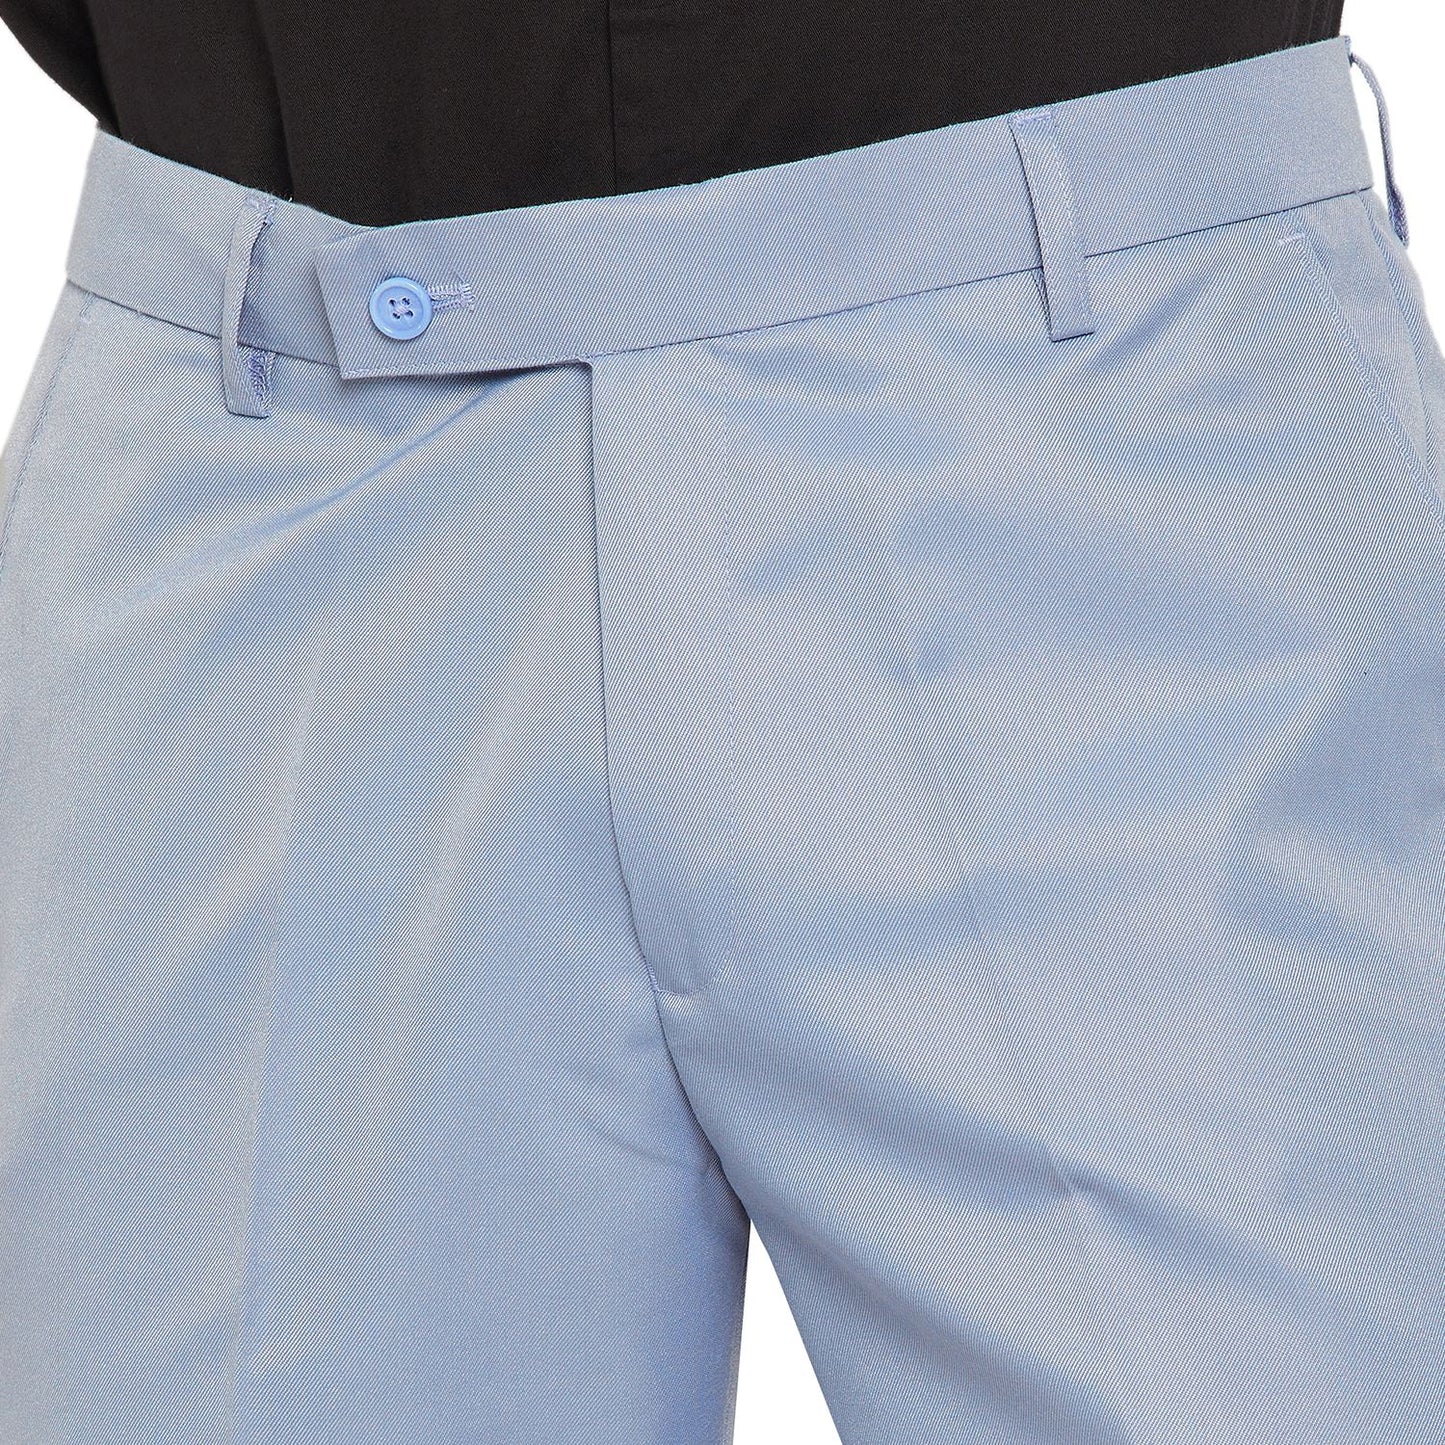 Men's Slim Fit Solid Formal Trouser